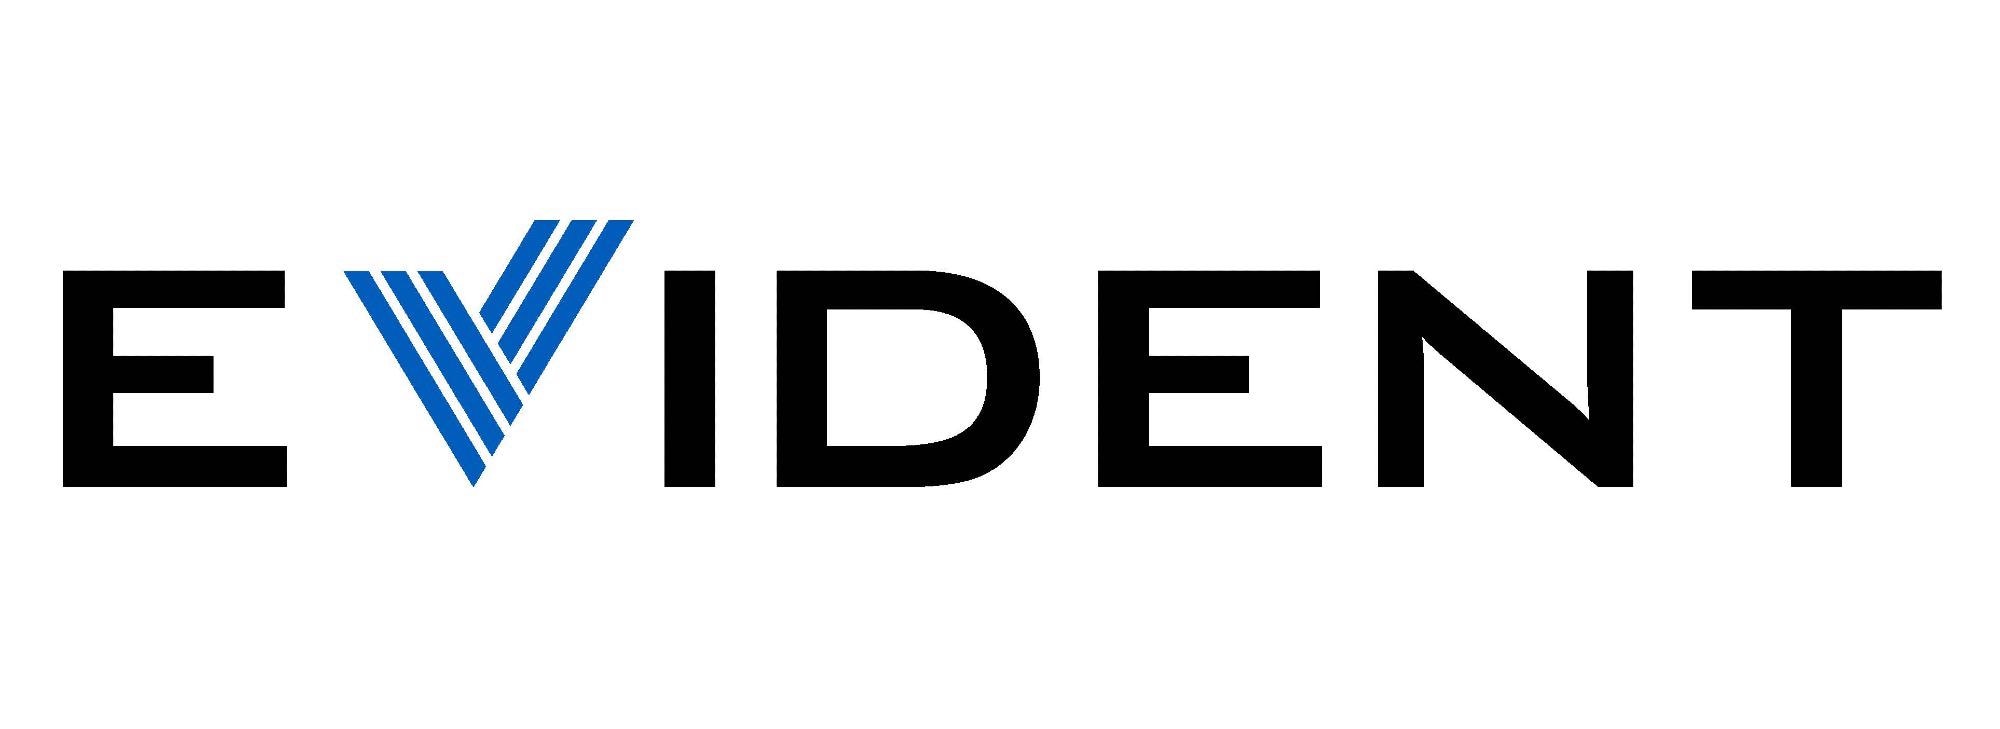 Evident Corporation logo.